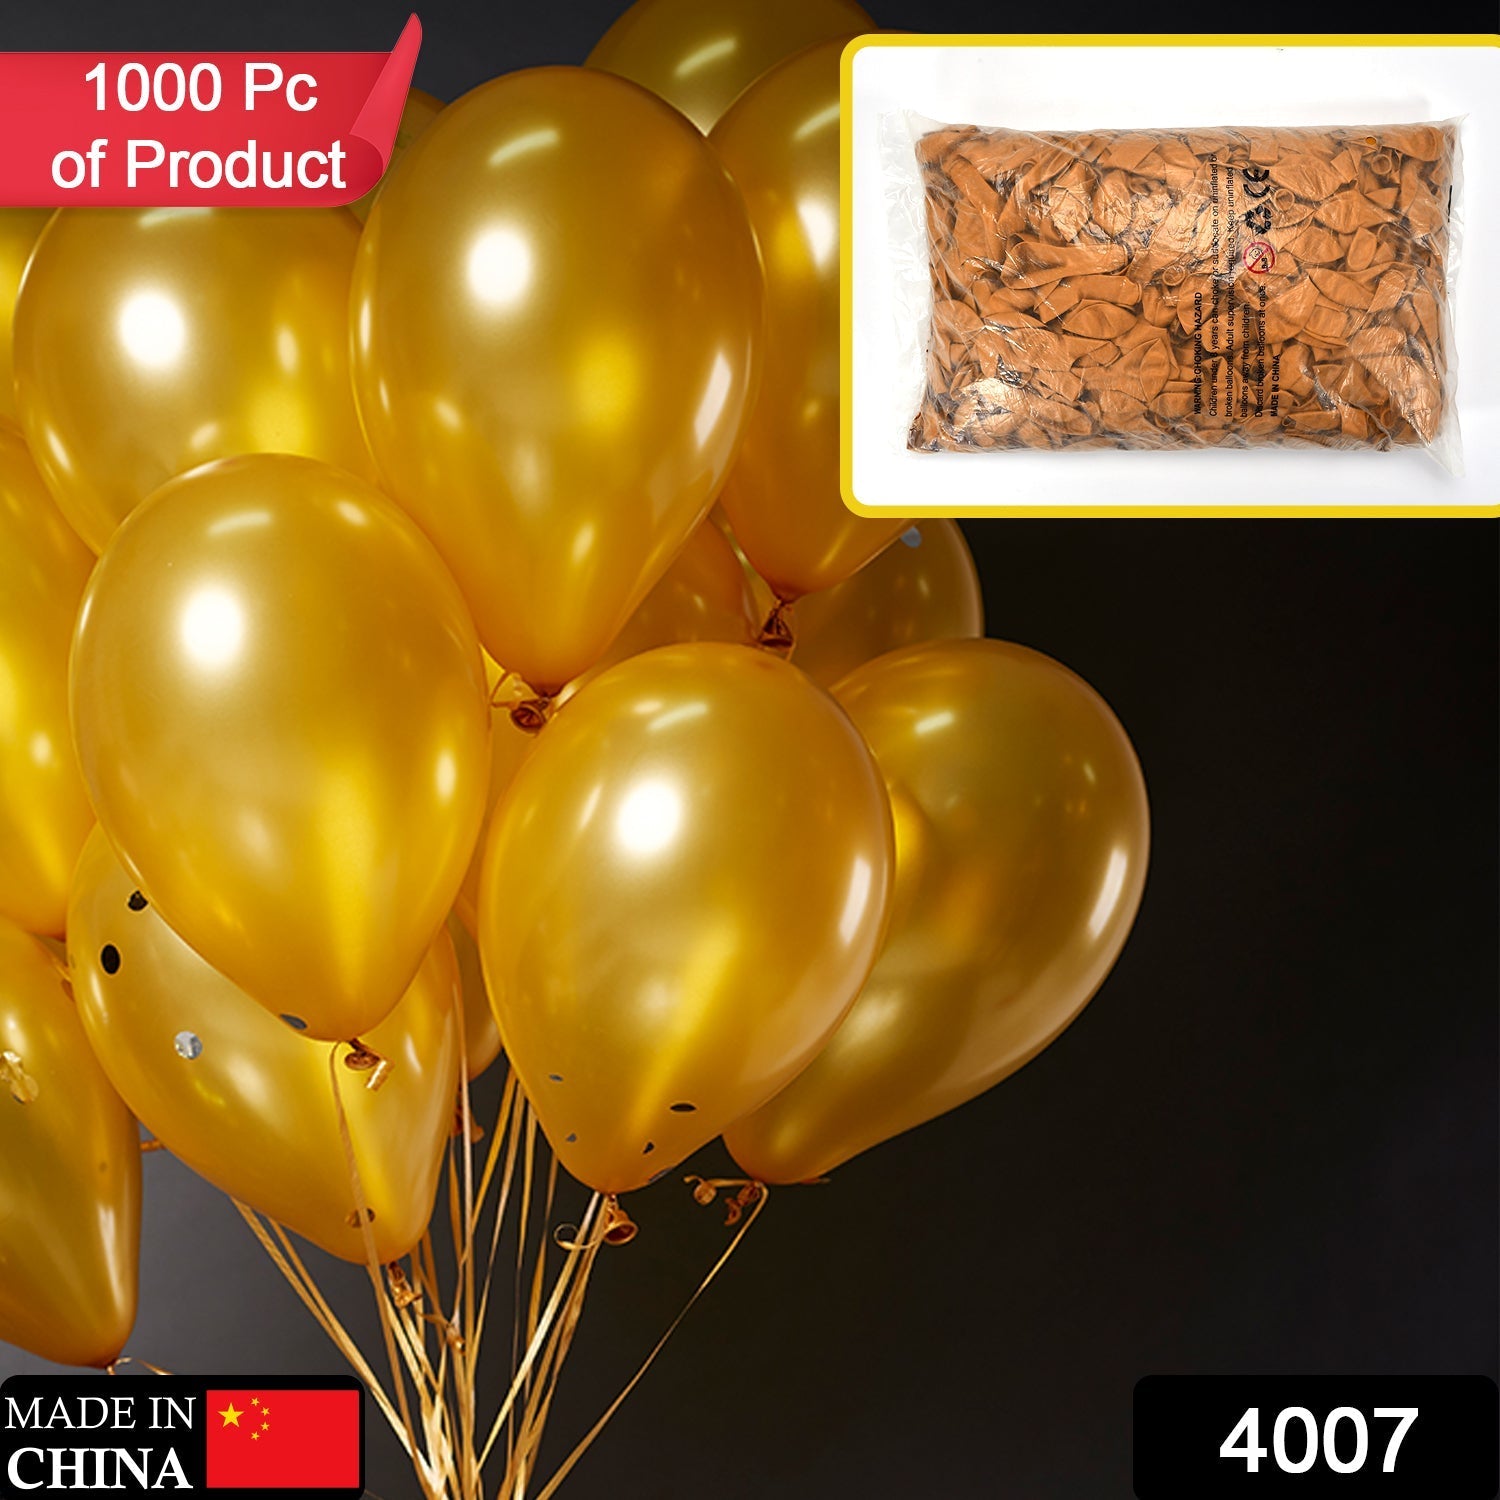 4007 Decoration Party Balloon for Birthday, Festival, Celebration - 1000 pcs (Multicolor) 